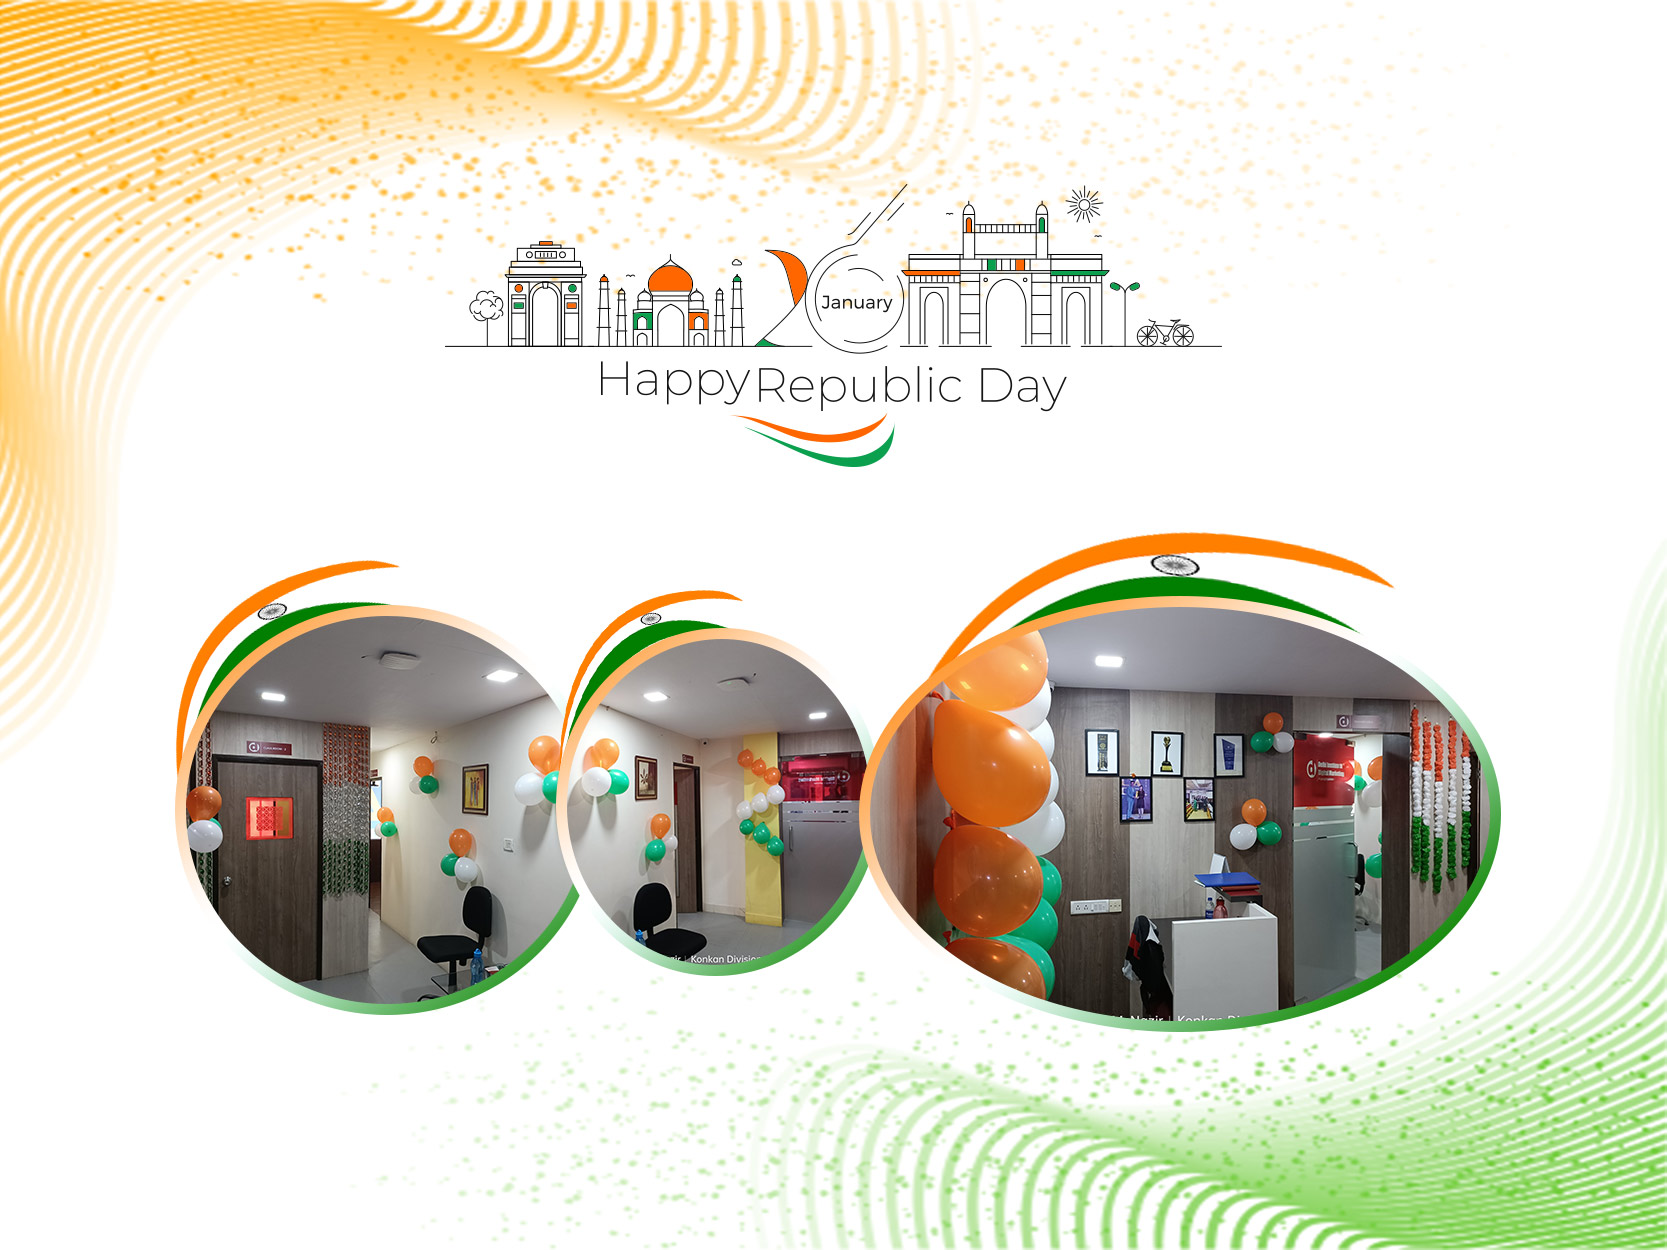 Delhi Institute of Digital Marketing Mumbai Branch celebrated India's 74th Republic Day